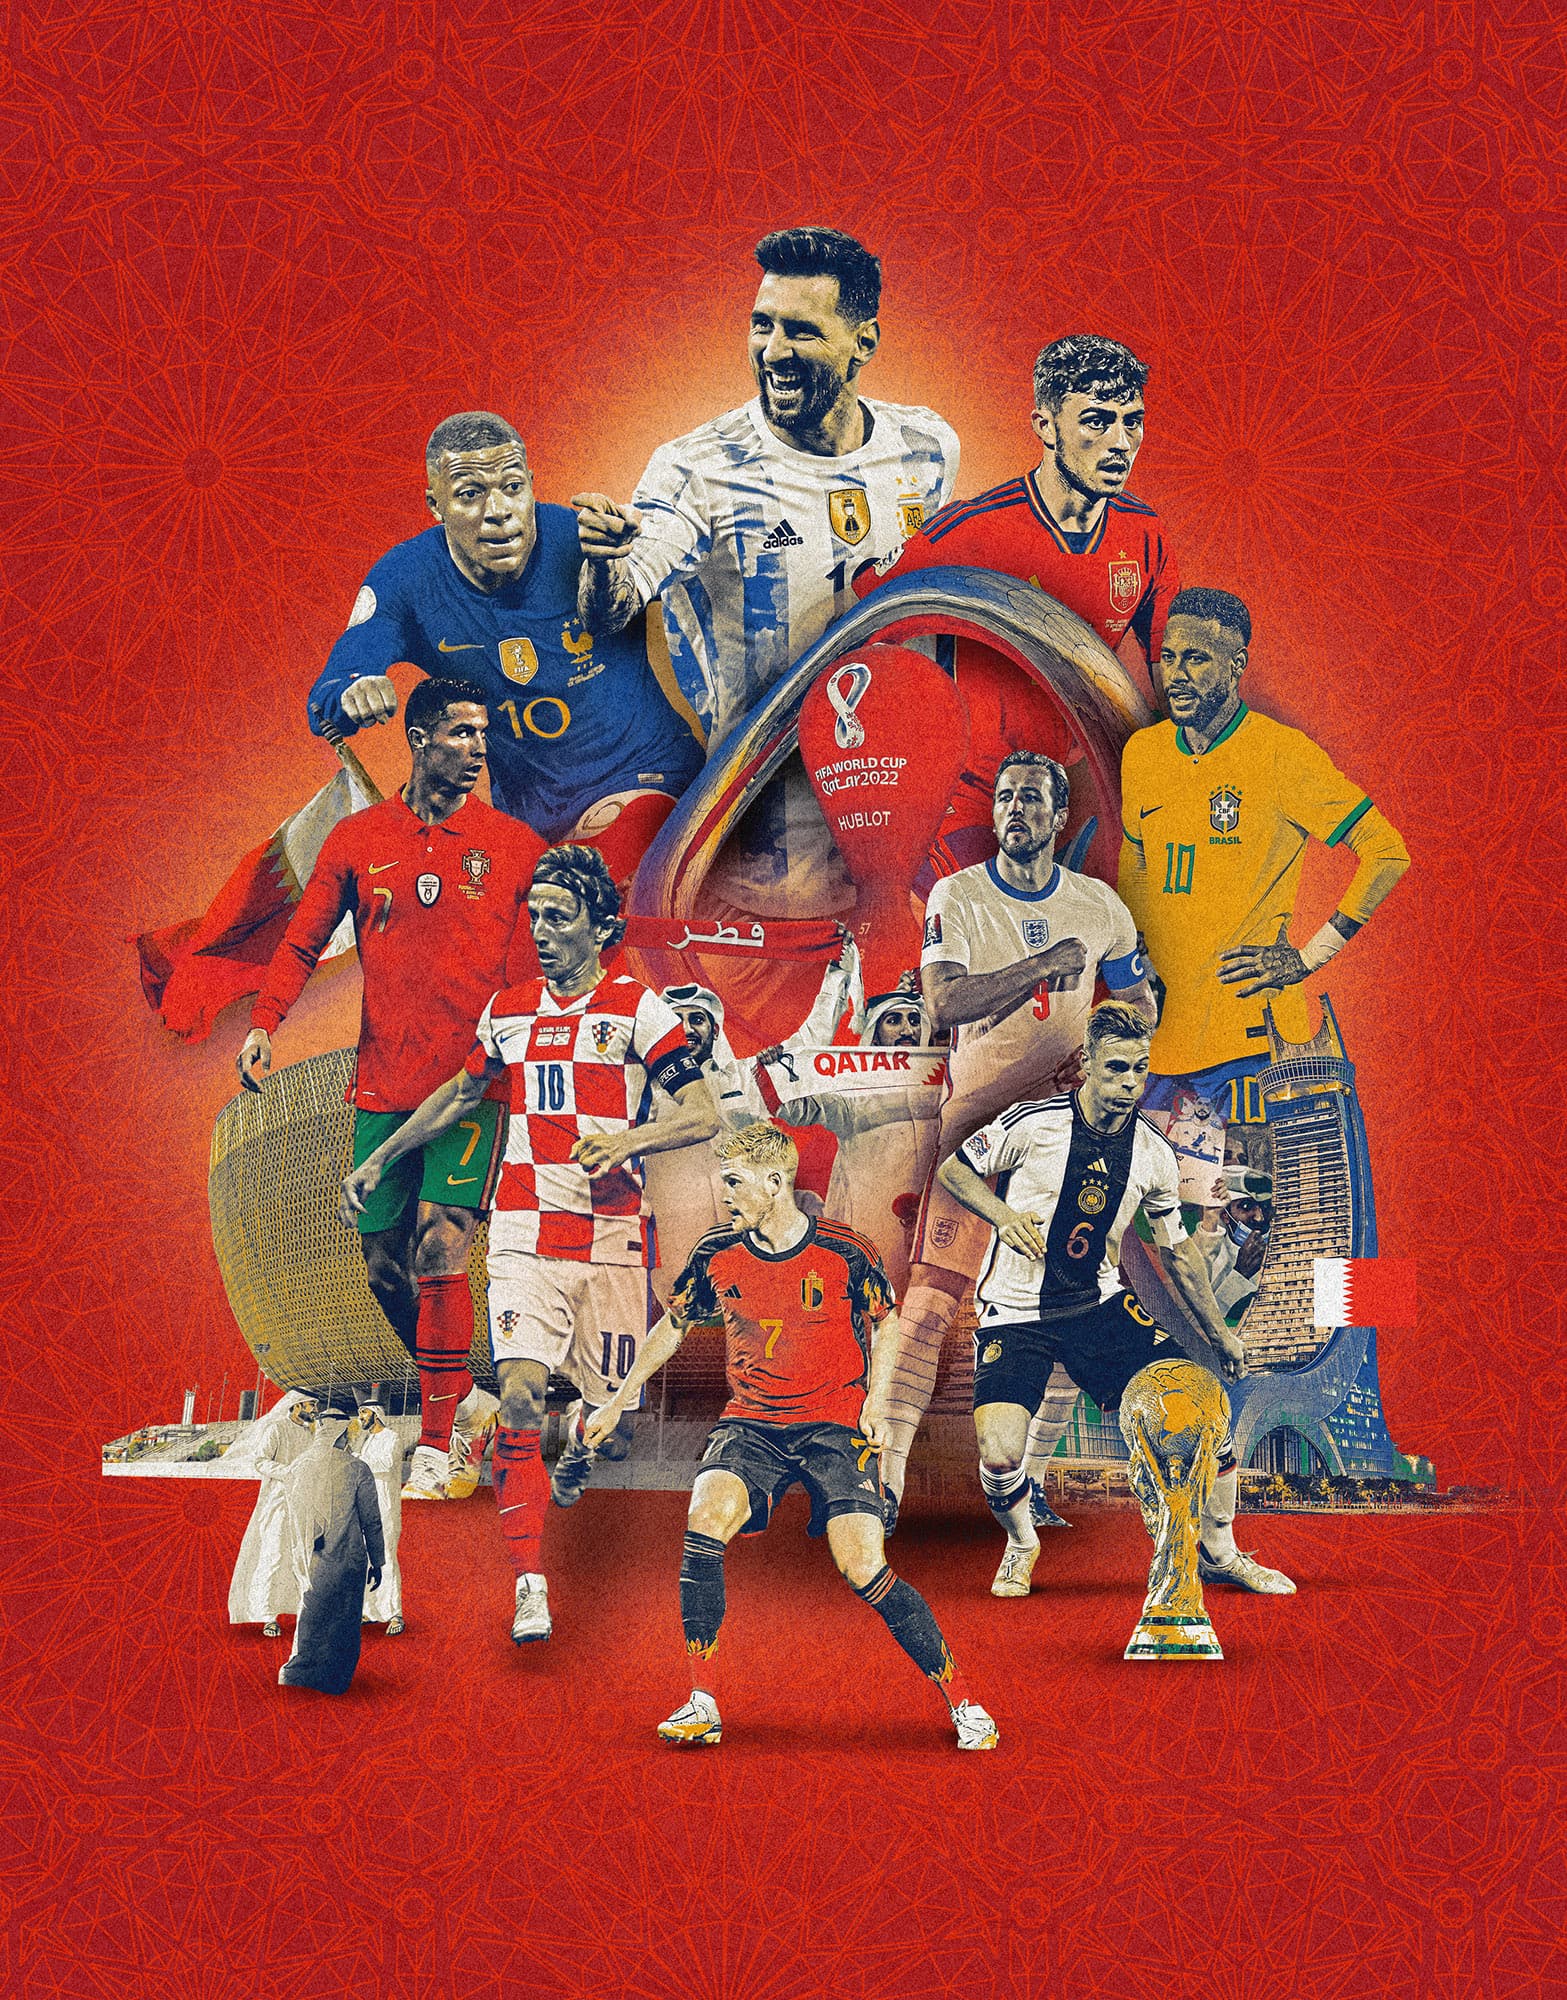 La Vanguardia: Qatar 22 World Cup Cover